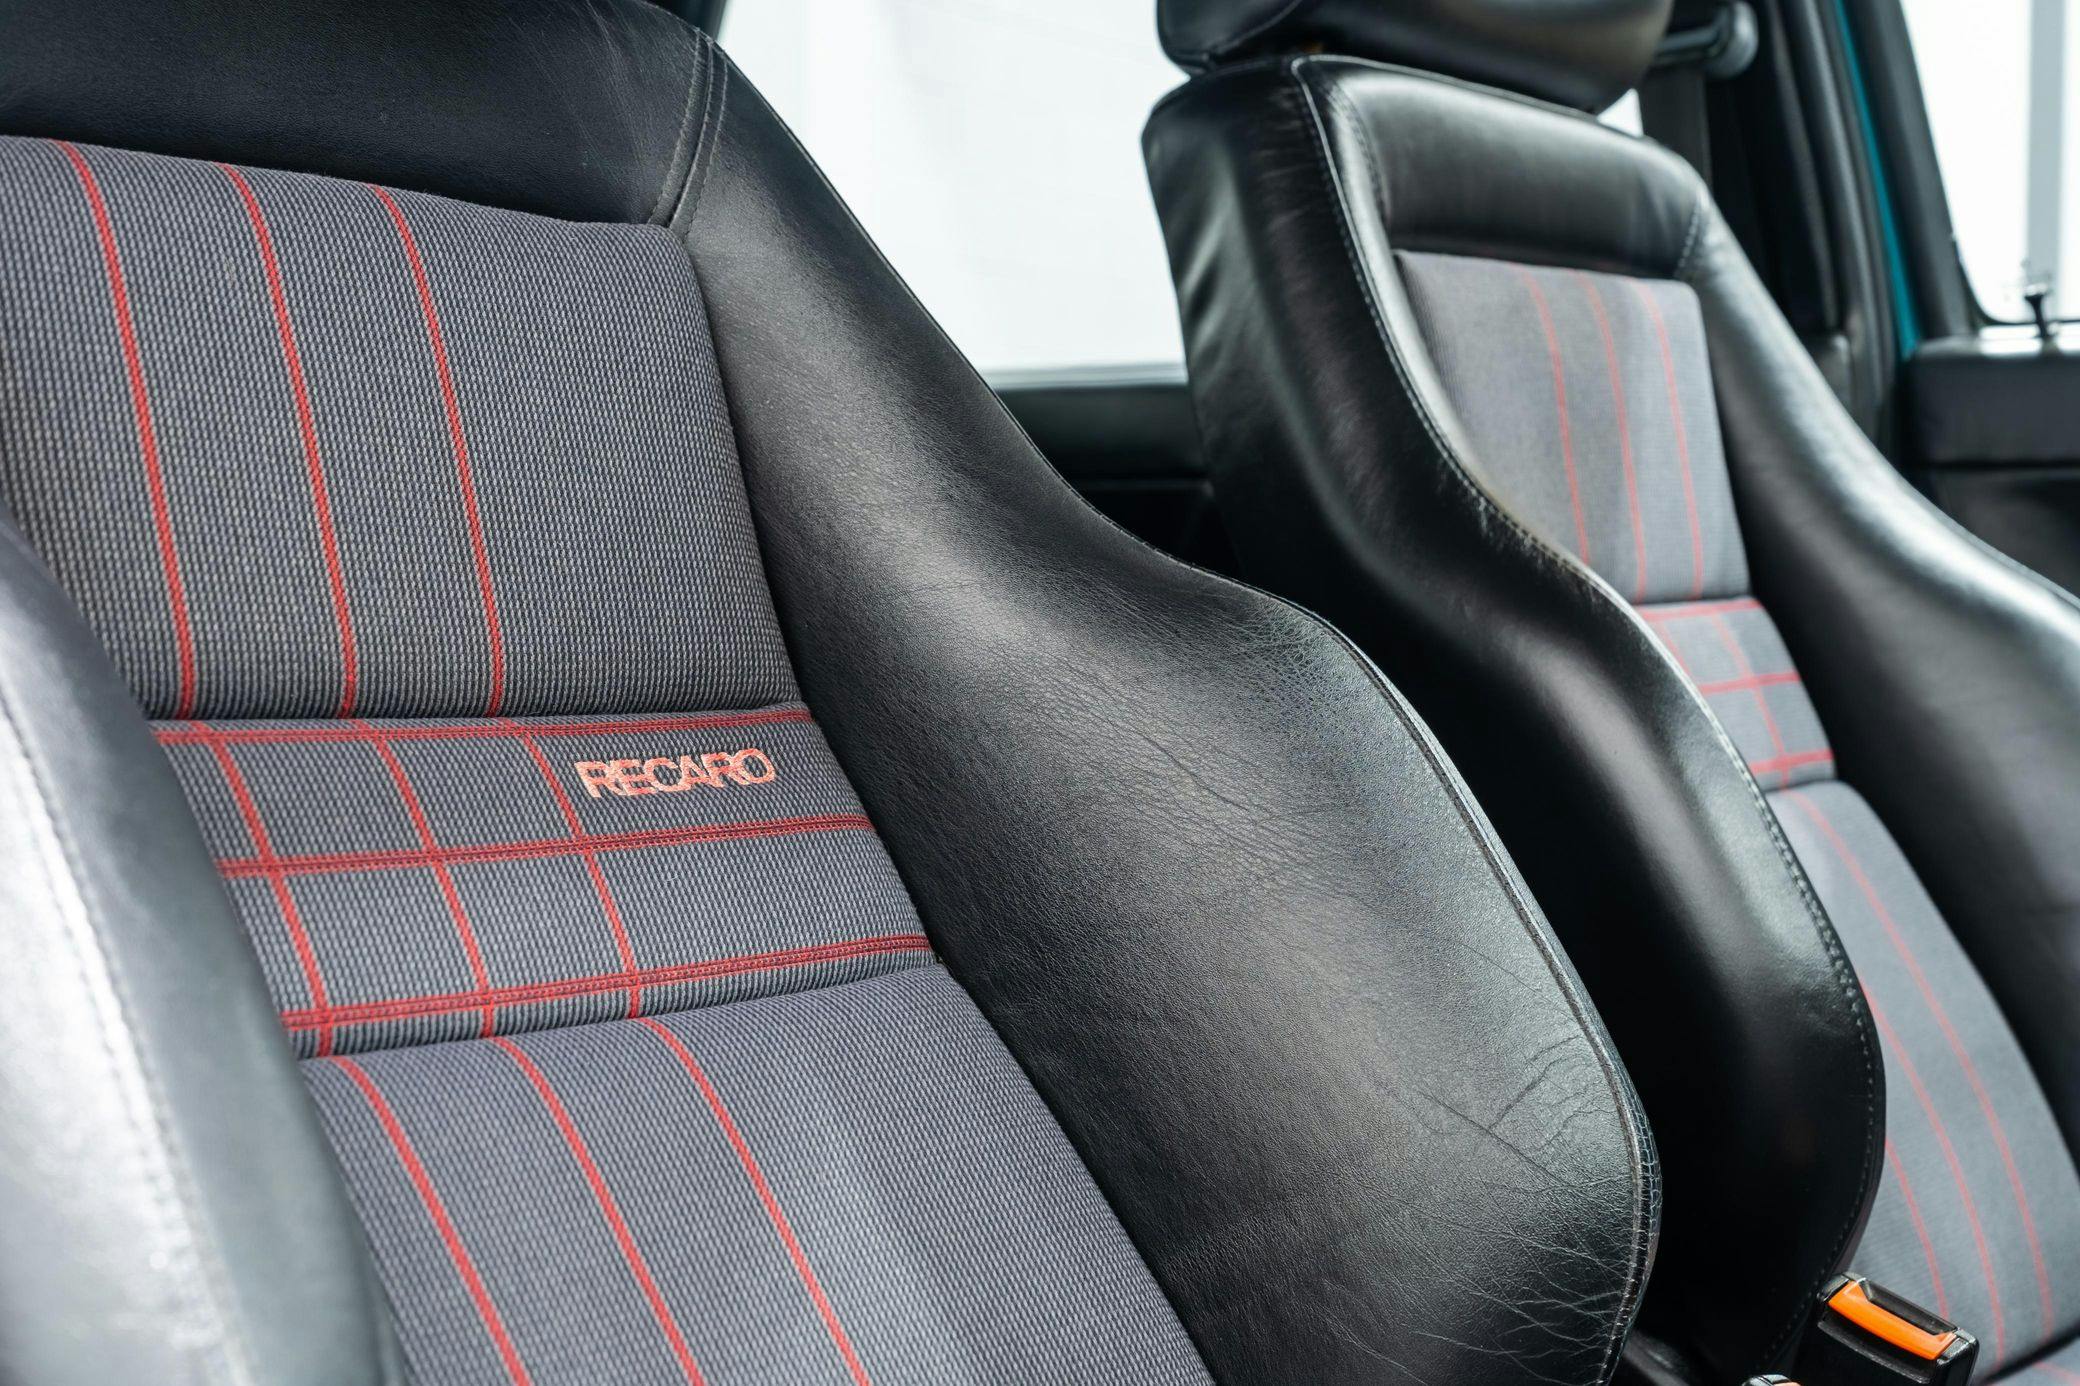 Volkswagen-G60-RallyeGolf interior recaro seat detail